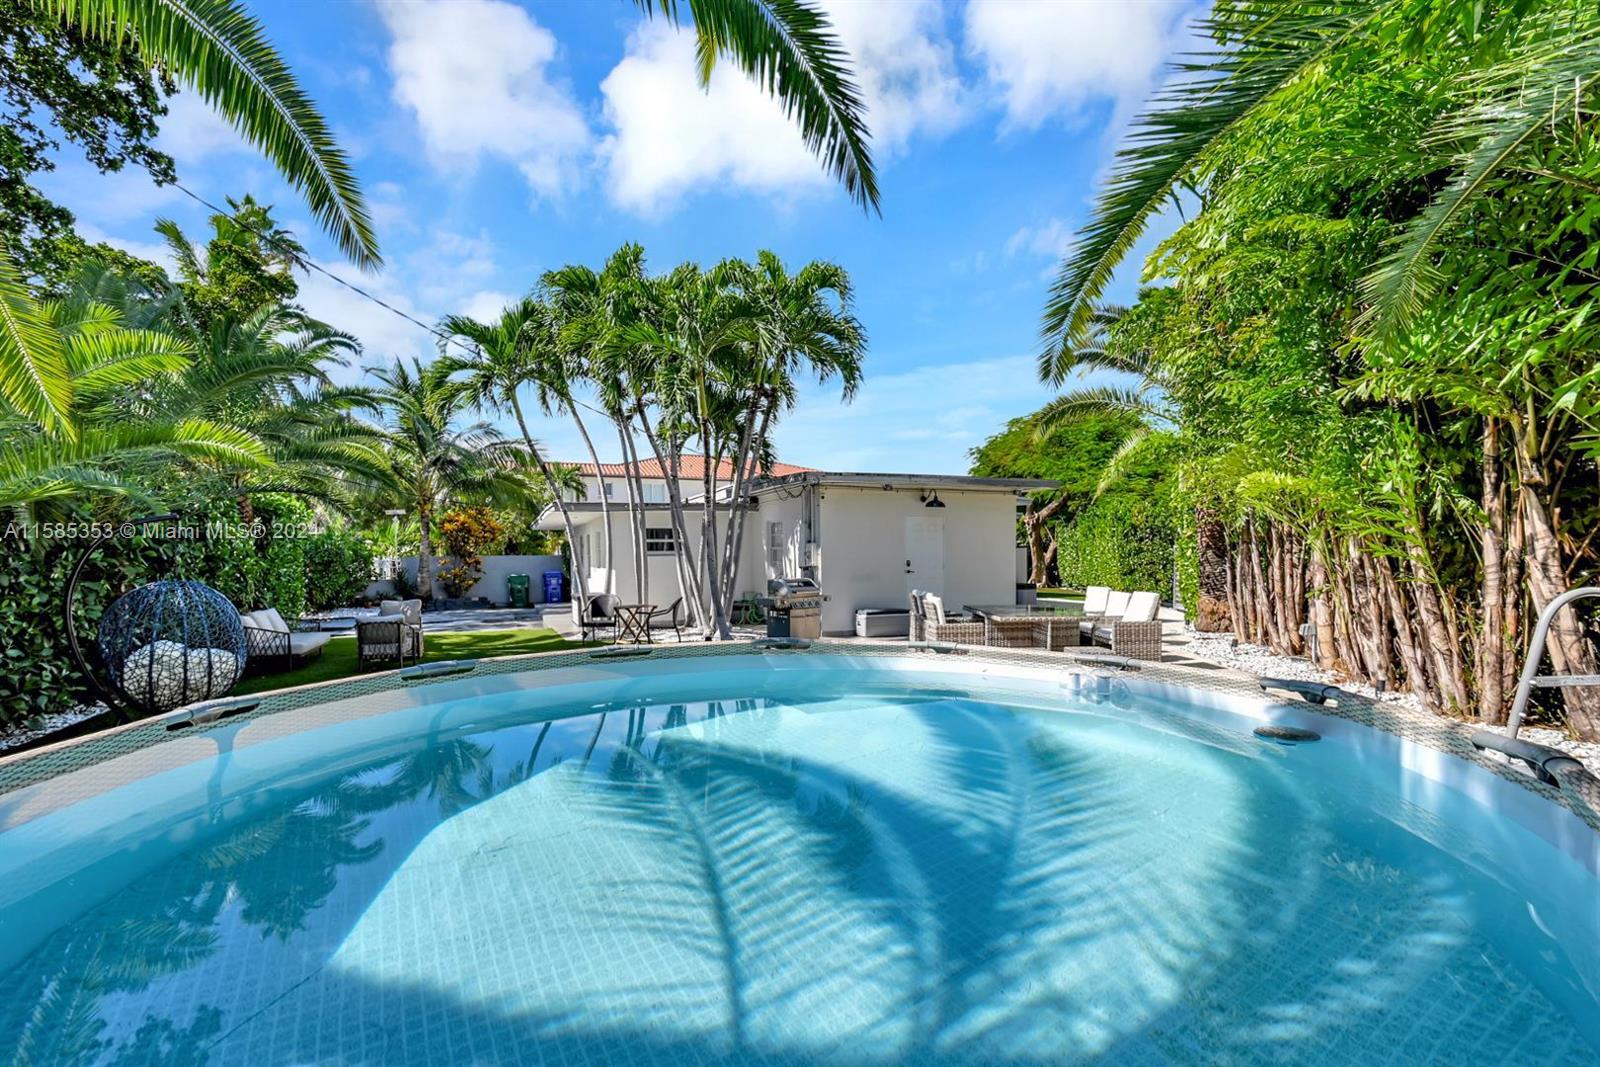 Rental Property at 1800 Sw 5th Ave, Miami, Broward County, Florida - Bedrooms: 3 
Bathrooms: 3  - $7,500 MO.